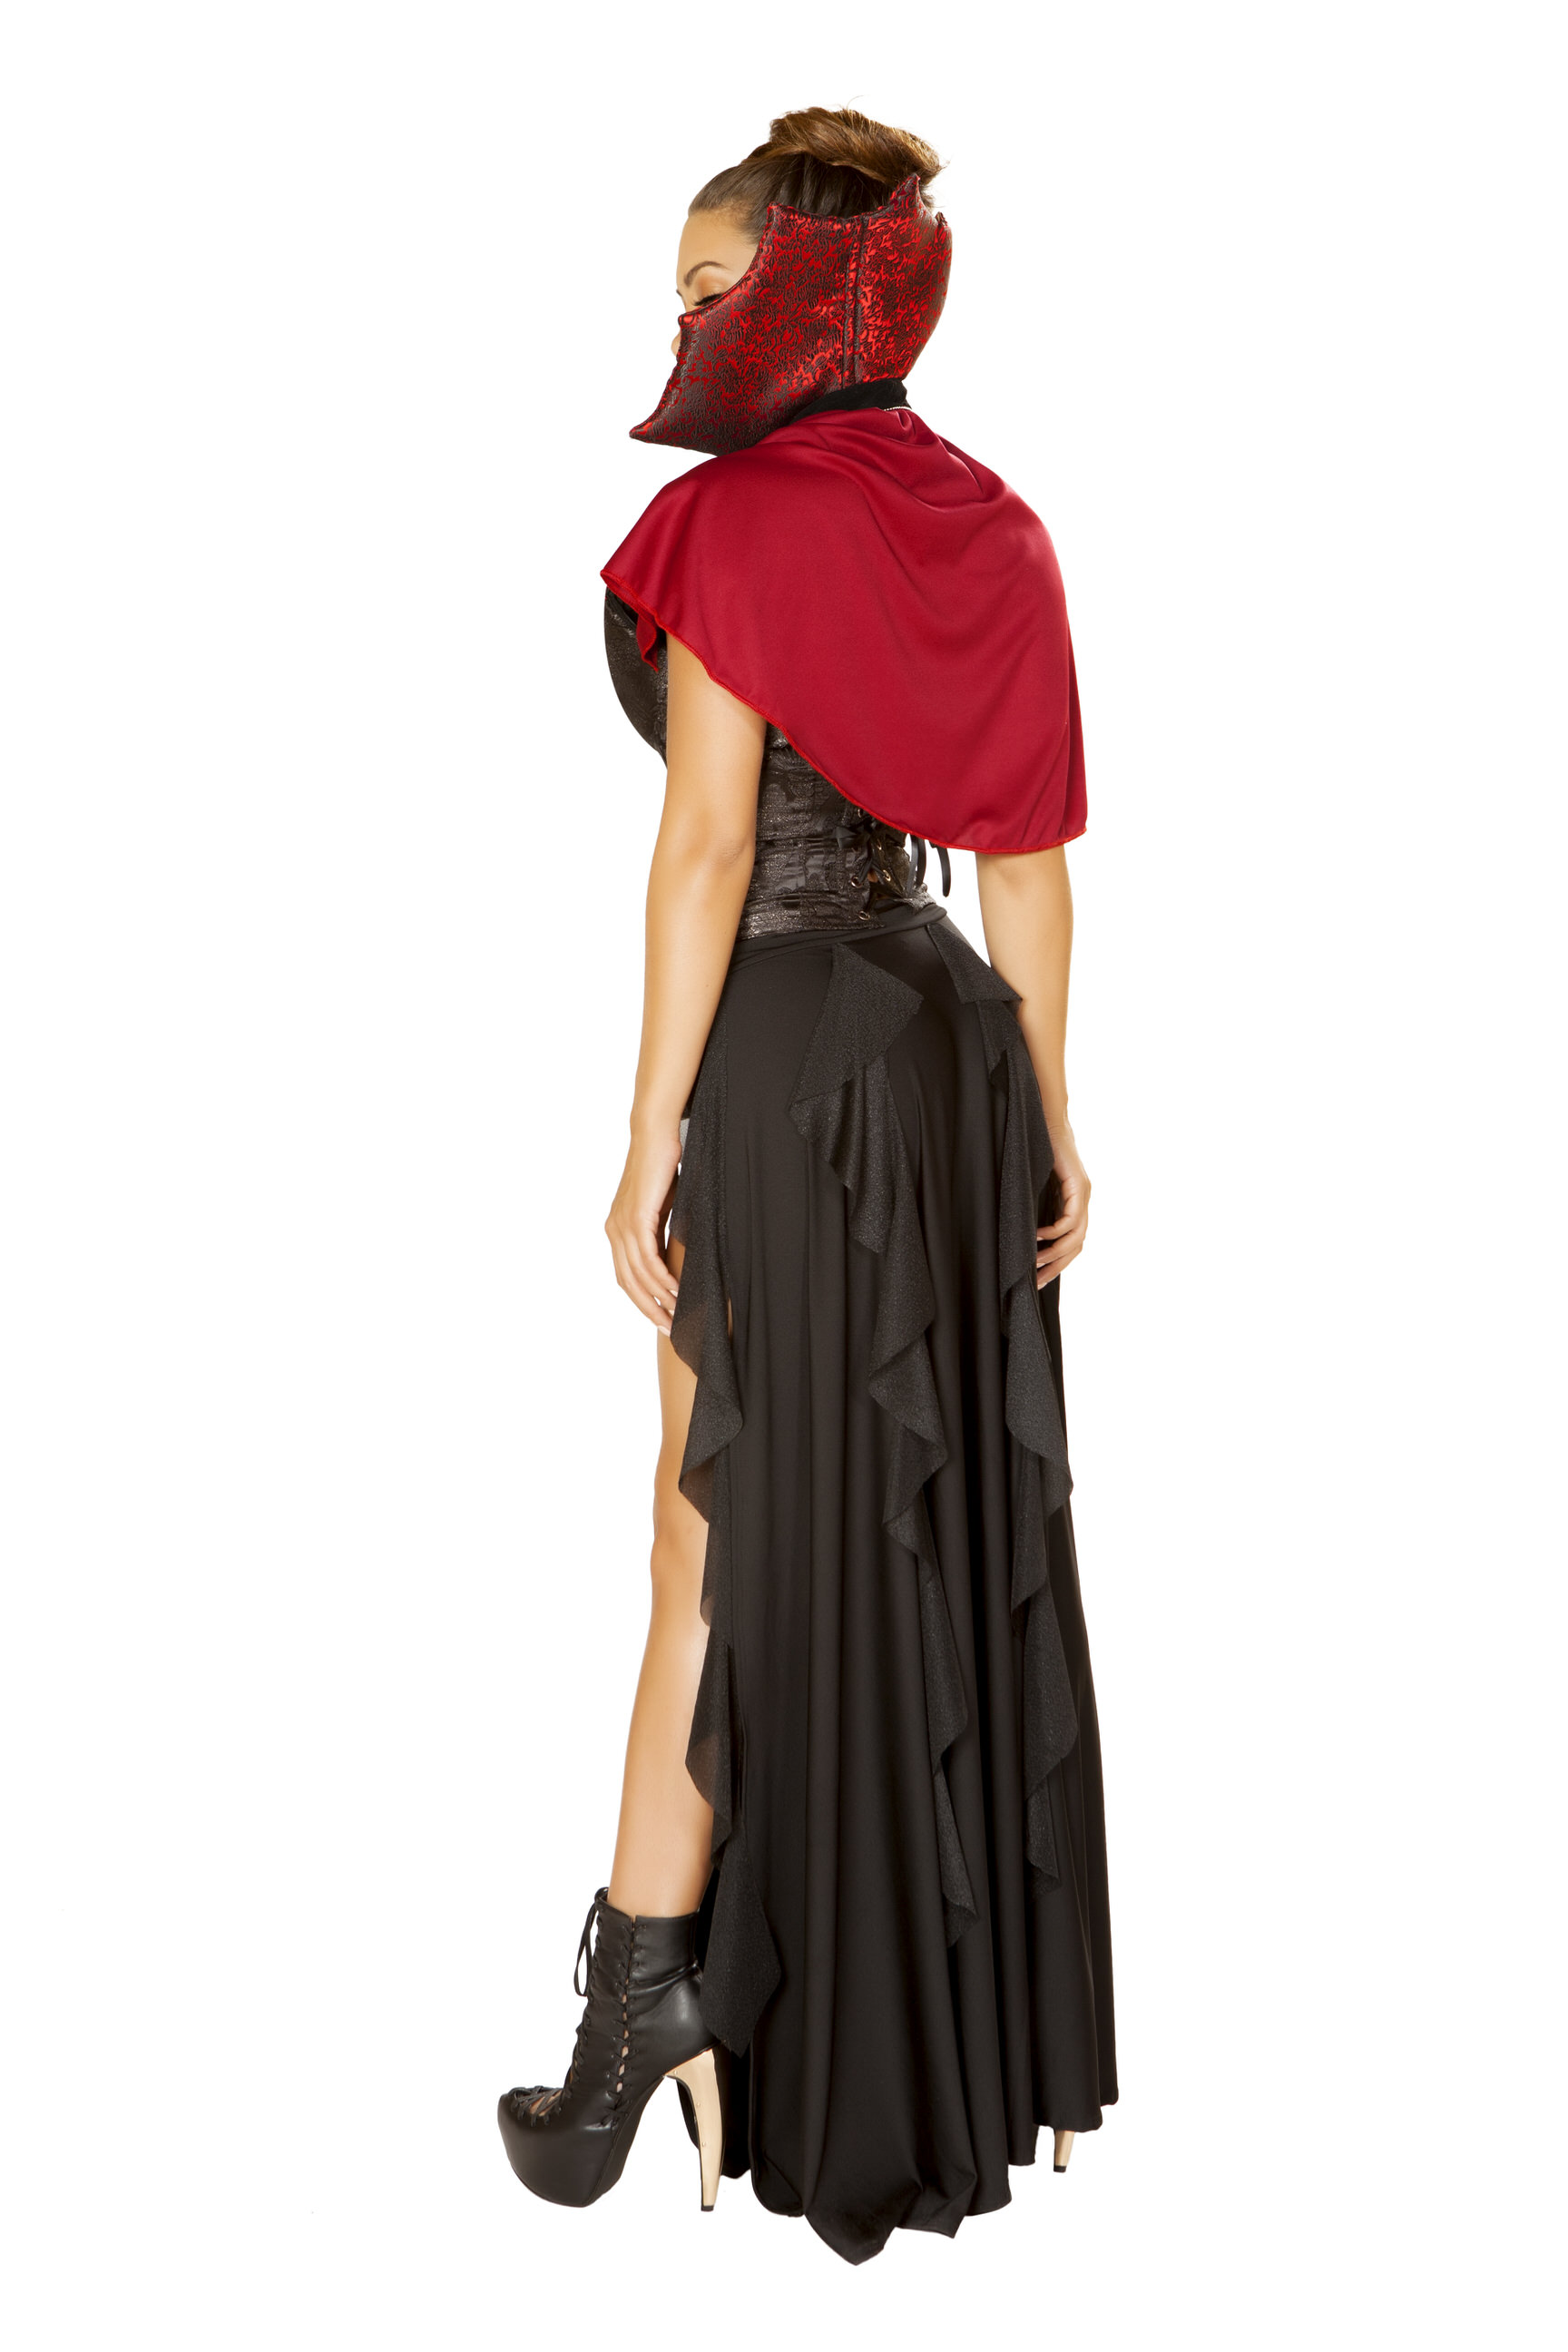 Roma Costume 3pc Blood Lusting Vampire, Red/Black, Large